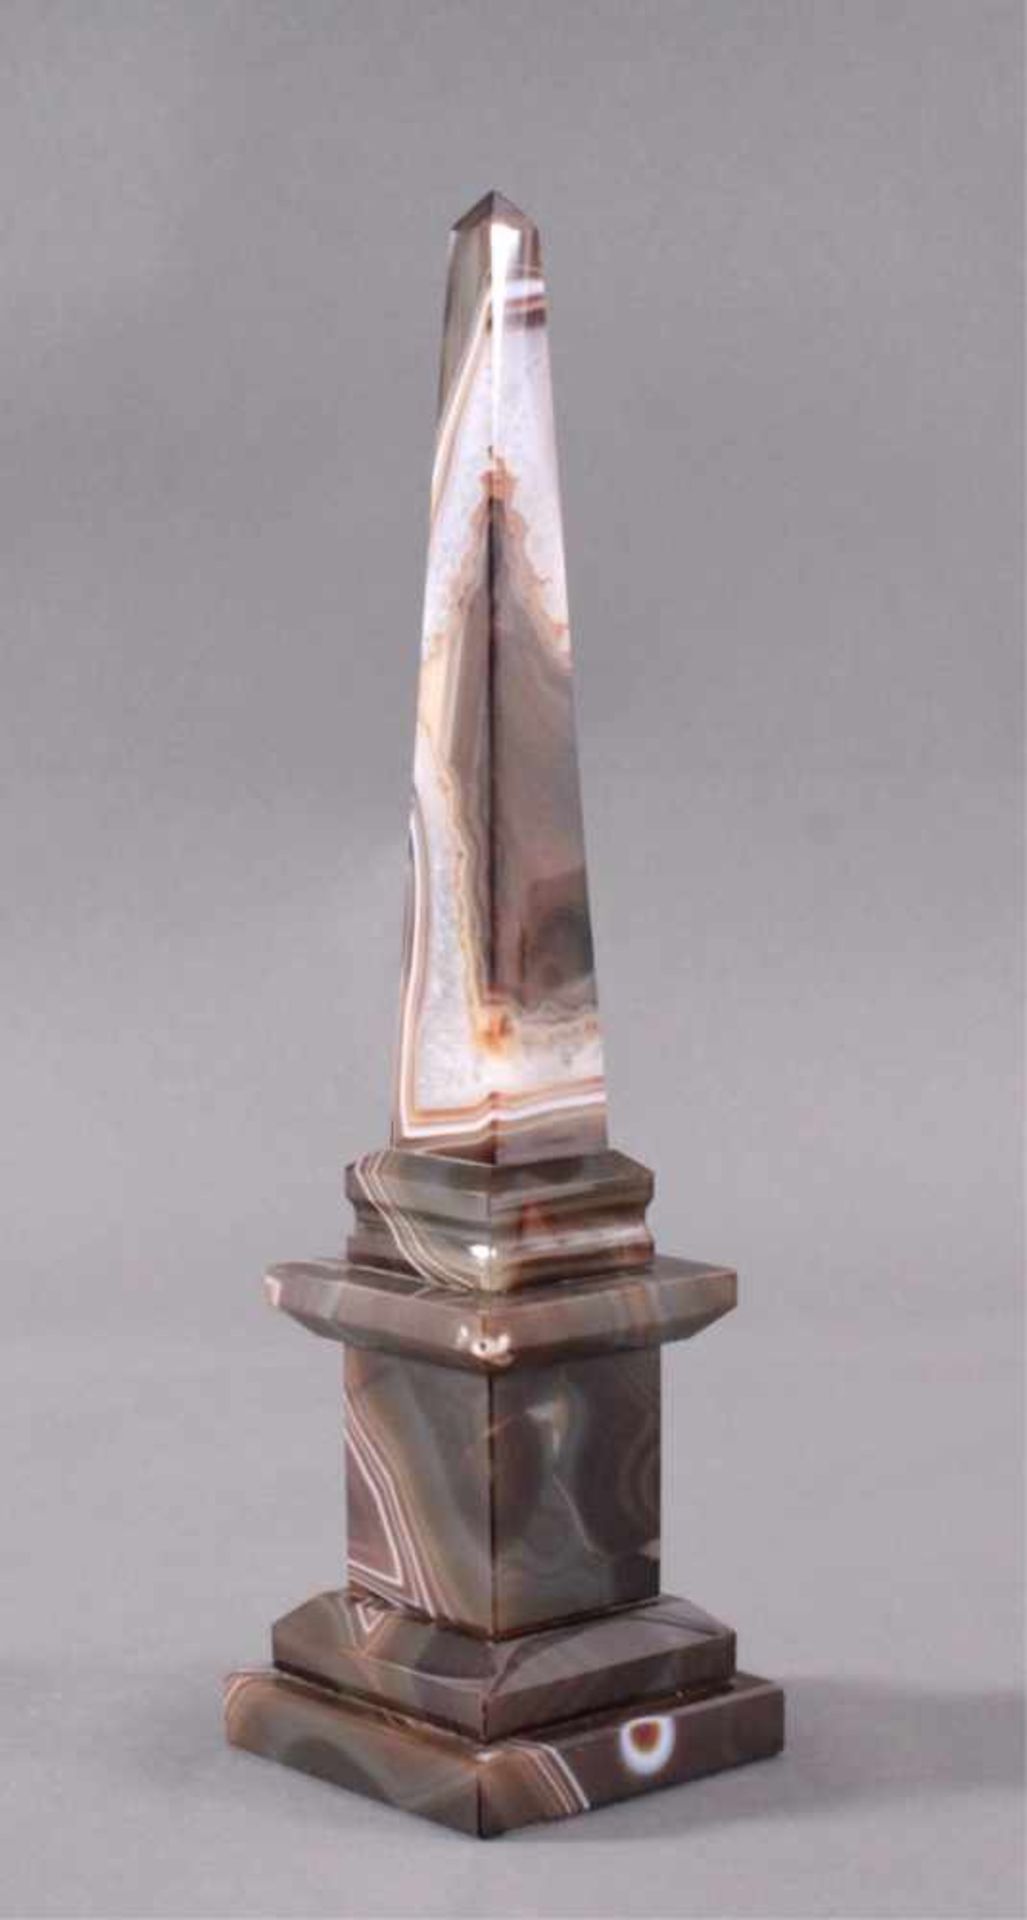 Achat ObeliskHöhe ca. 40 cm, Gewicht ca. 2,55 kg. - Image 2 of 4